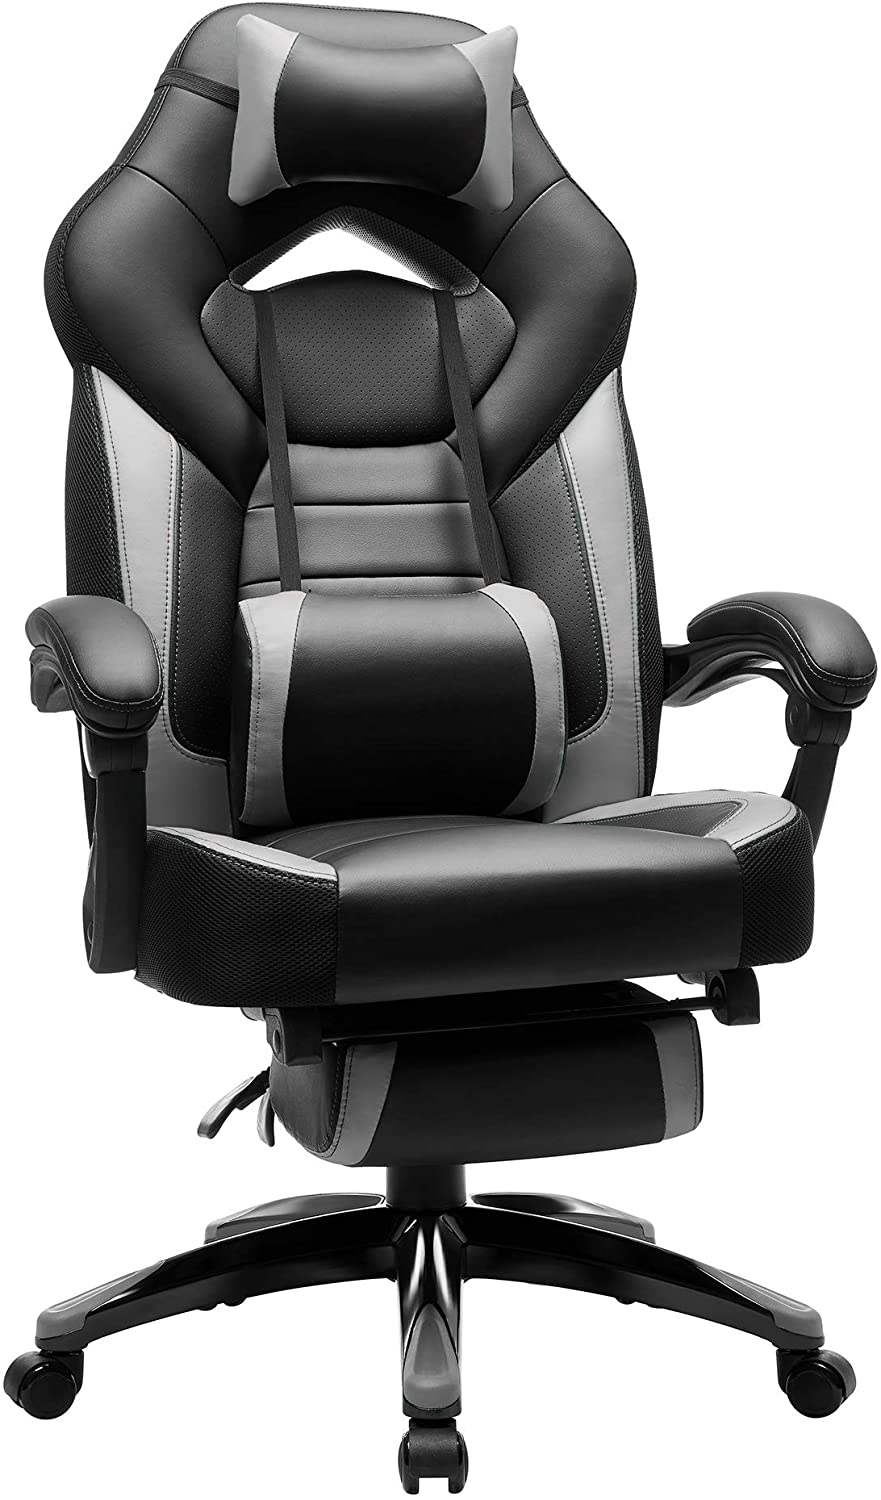 Executive Office Chair, Ergonomic, Black, gråOBG77BG RAW58.dk 